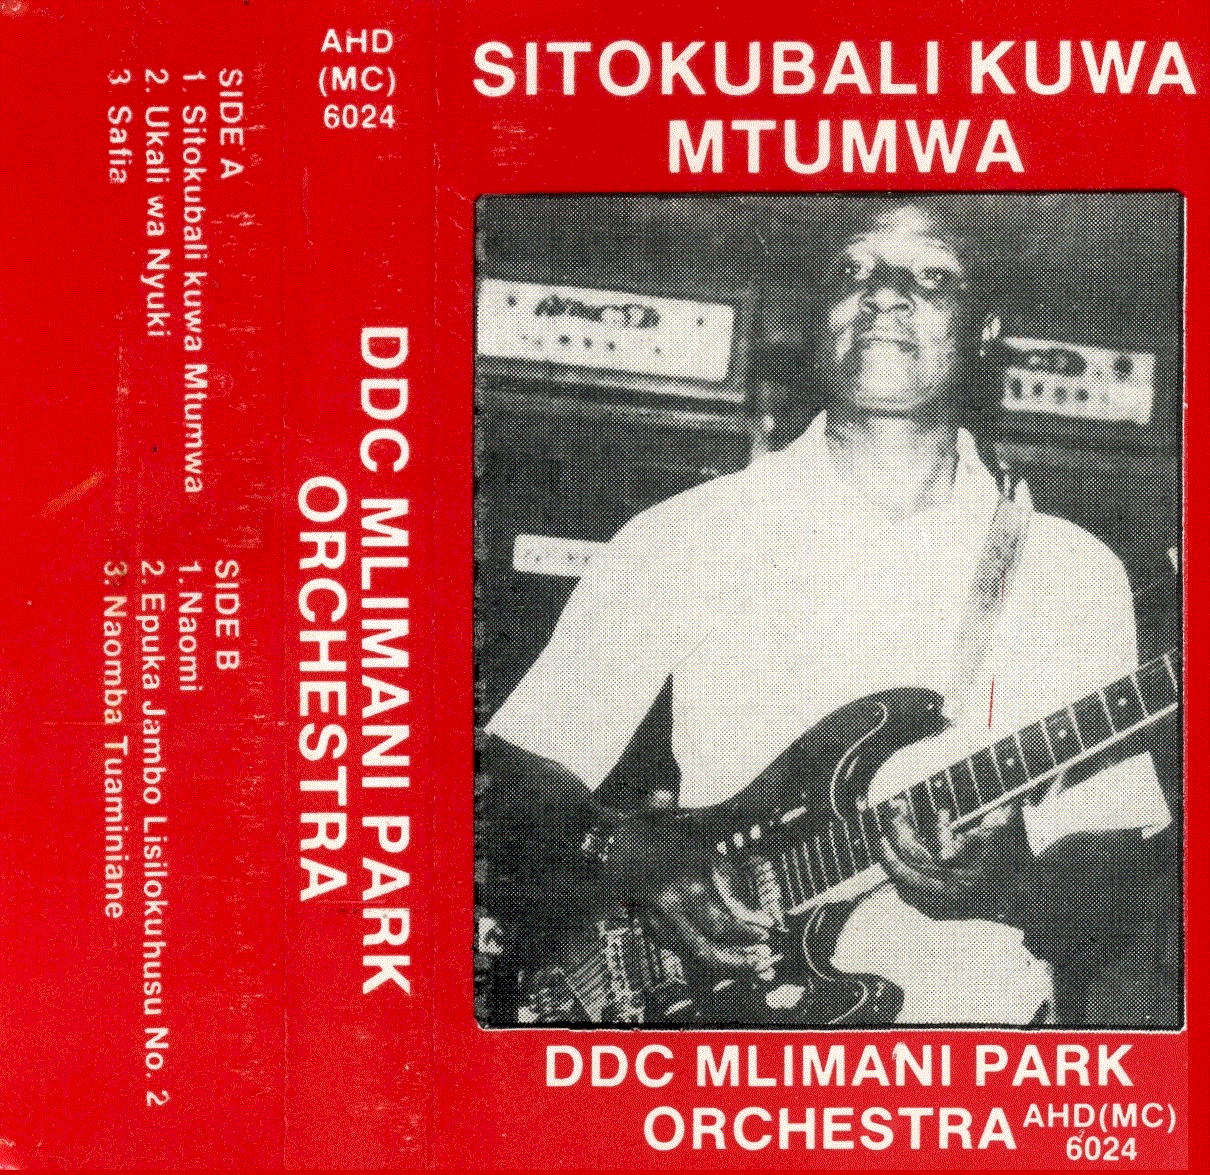 Audio: DDC Mlimani Park Orchestra [Tape]